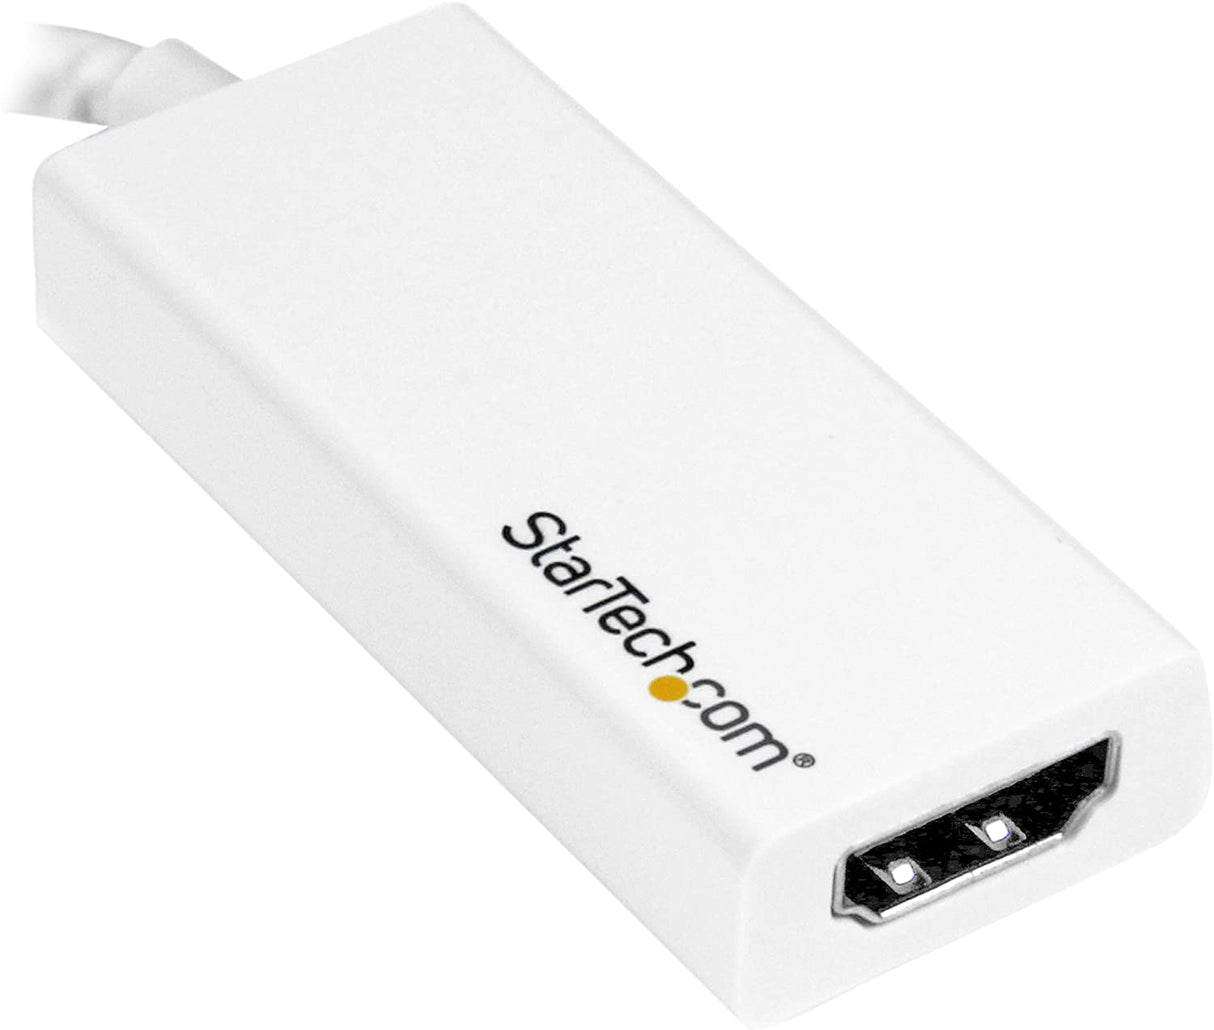 StarTech.com USB C to HDMI Adapter - 4K 30Hz - USB 3.1 Type-C to HDMI Adapter - USB-C to HDMI Dongle - Monitor Adapter - White (CDP2HDW) White 4K 30Hz